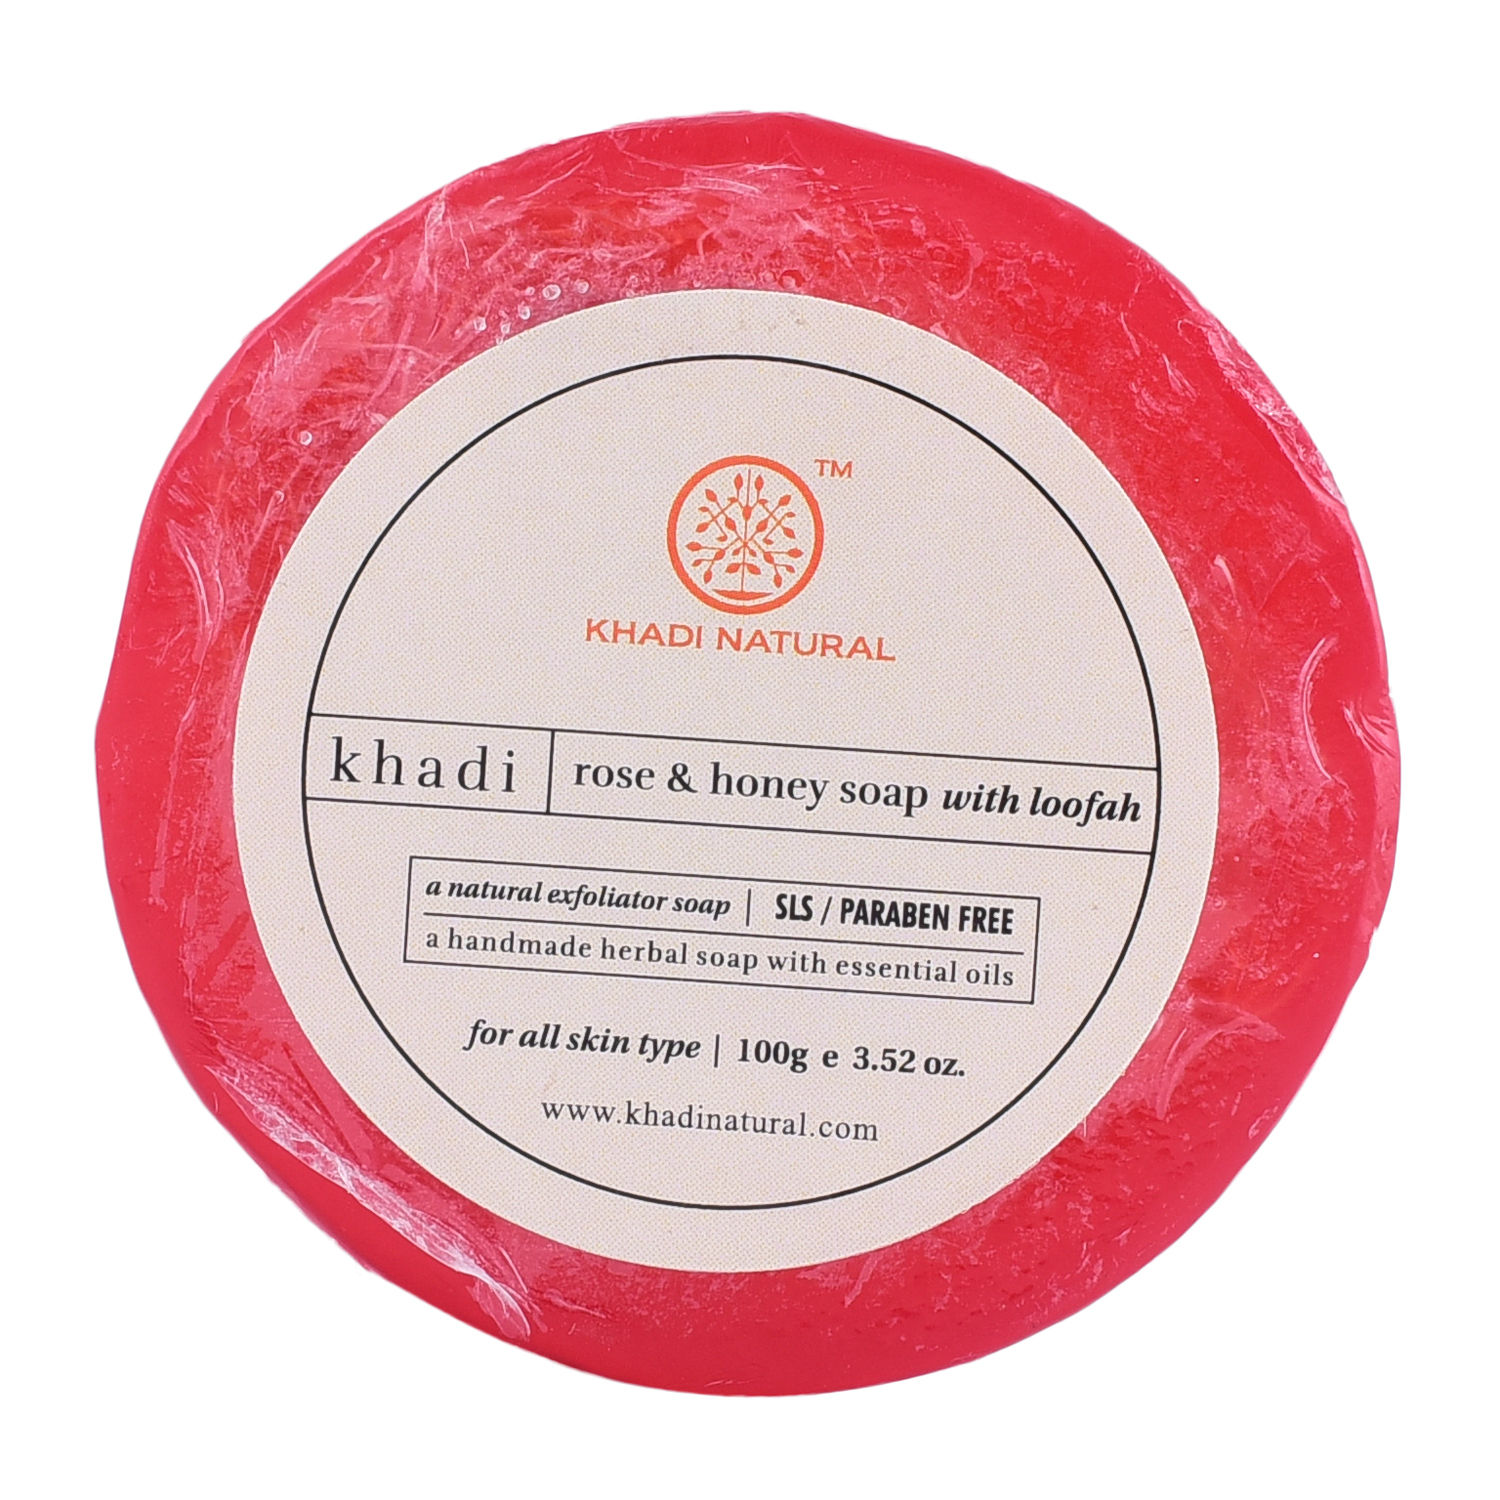 Khadi Natural Rose & Honey Soap With Loofah